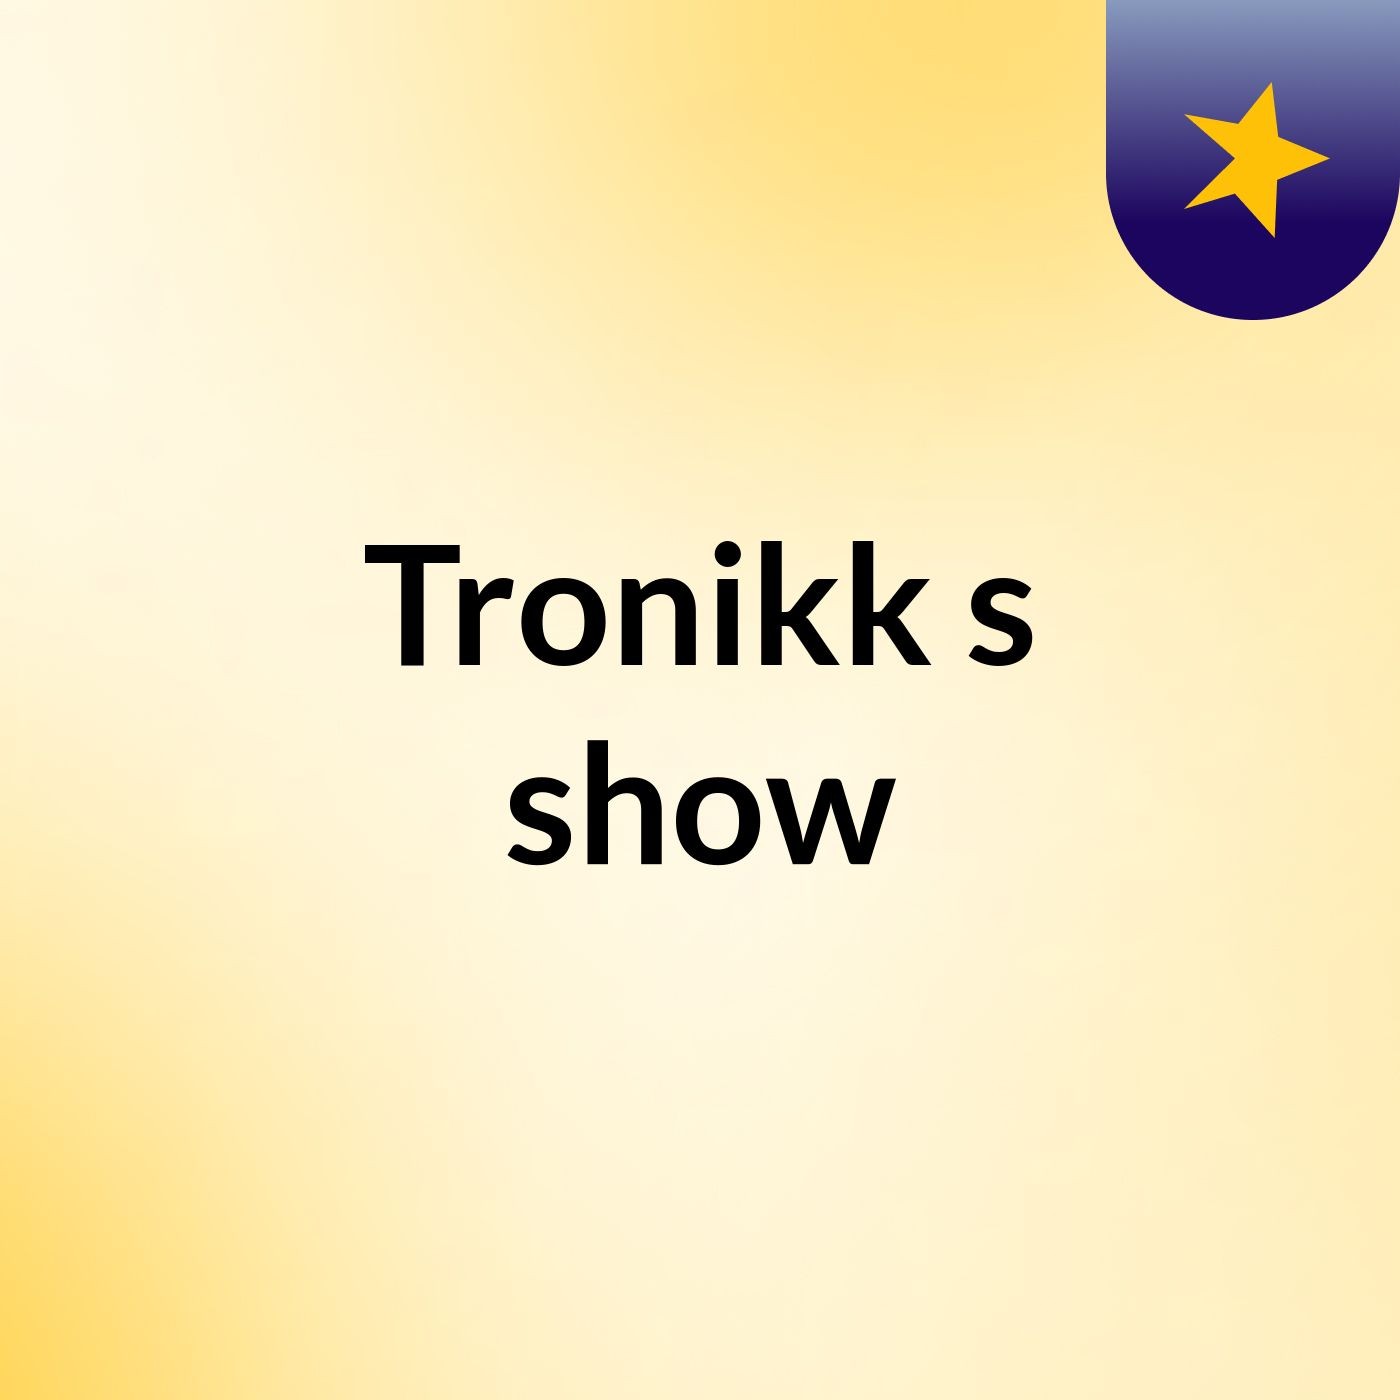 Tronikk's show